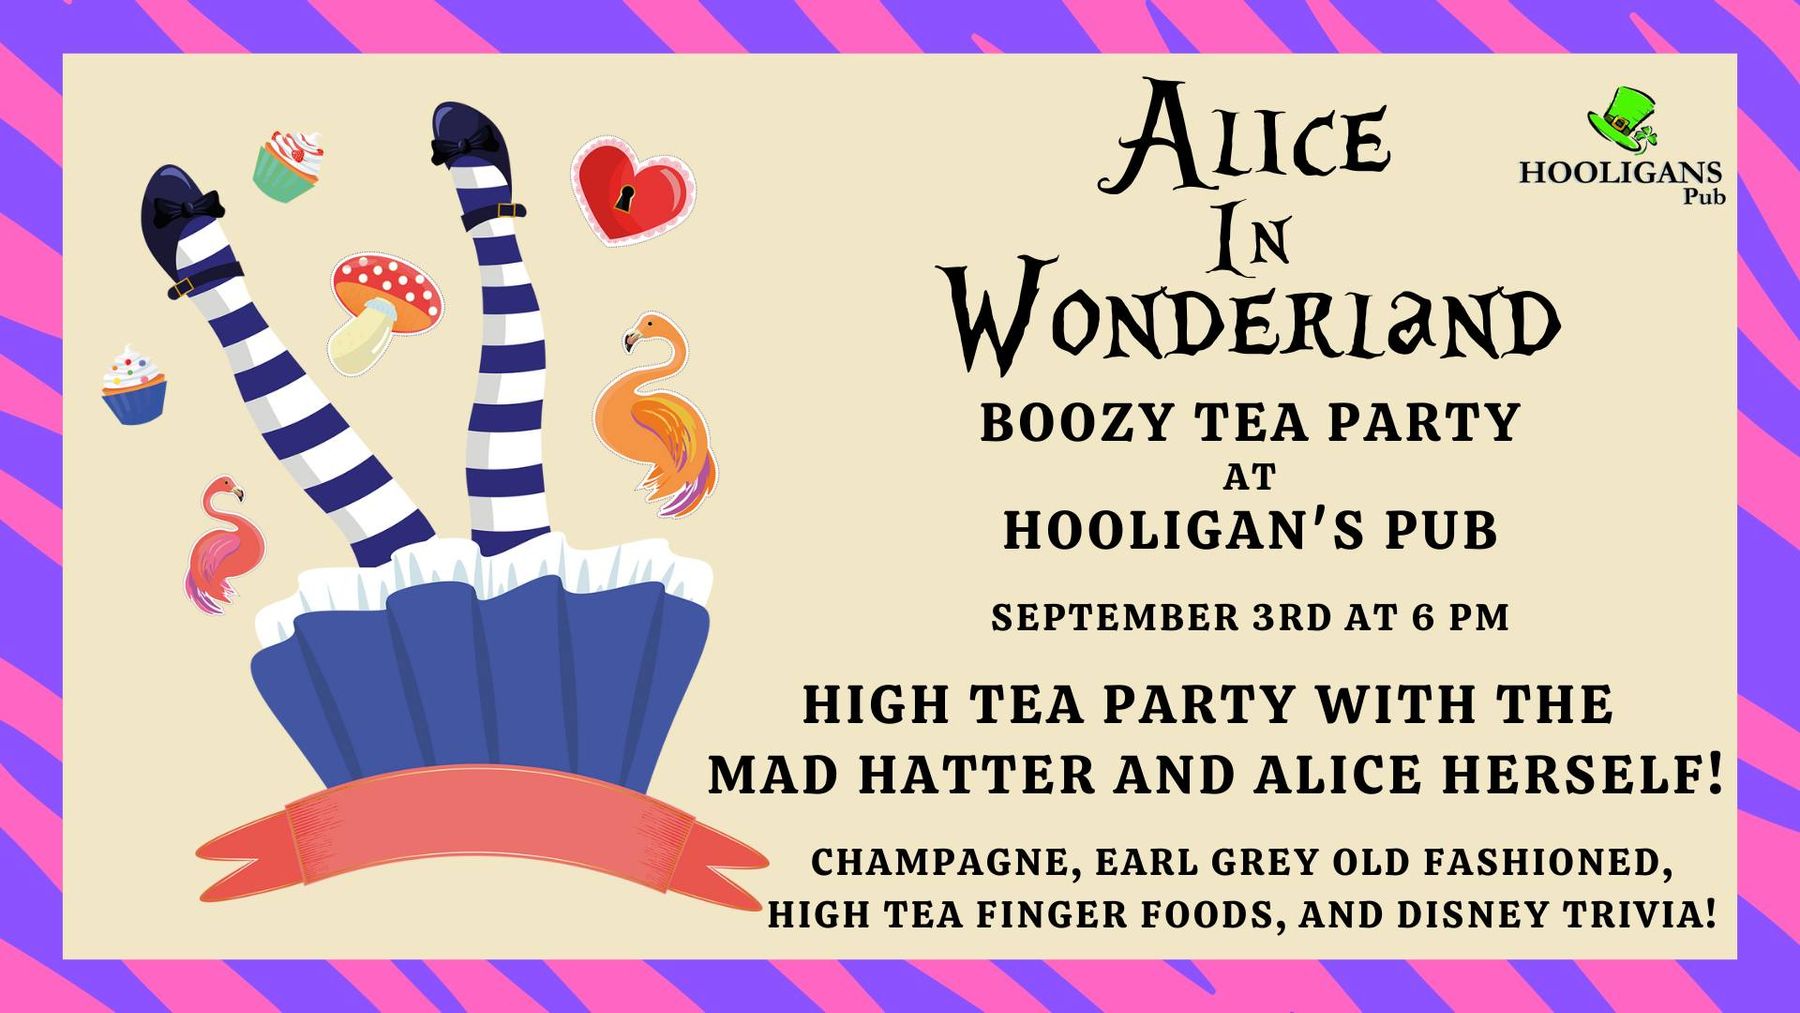 Pop-up coming to Dallas promises Alice in Wonderland boozy tea